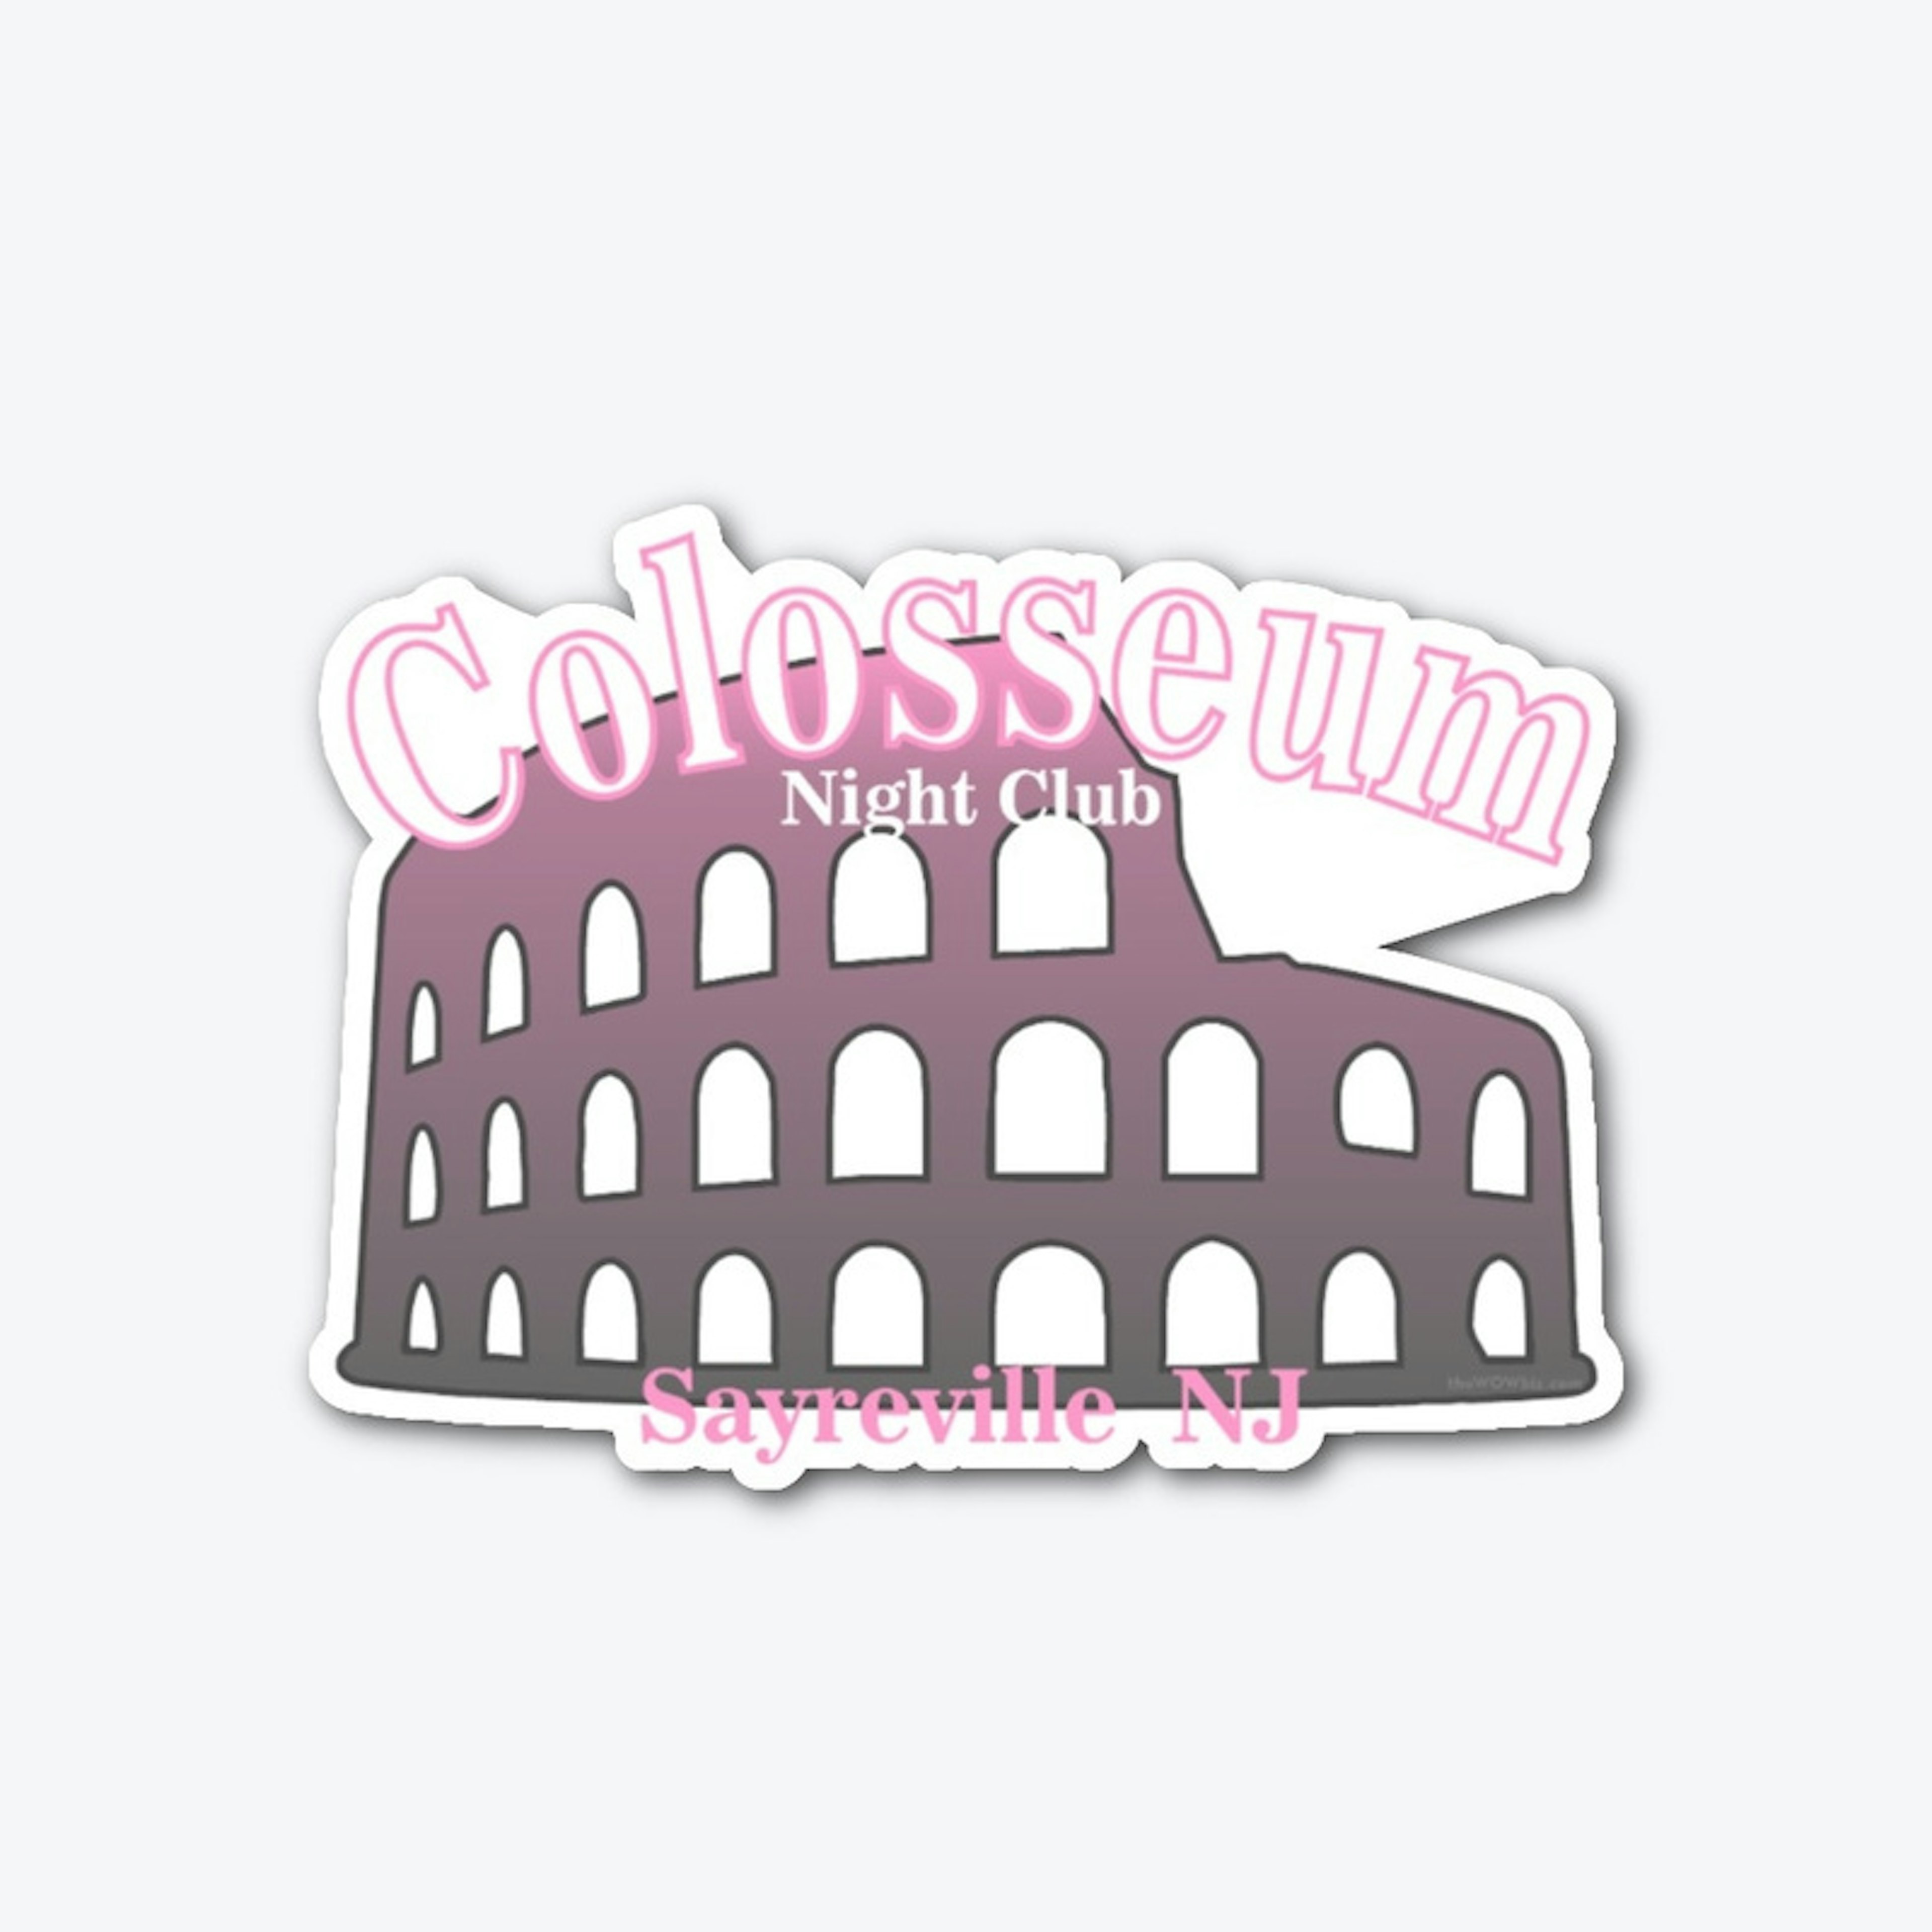 ColosseumNJ